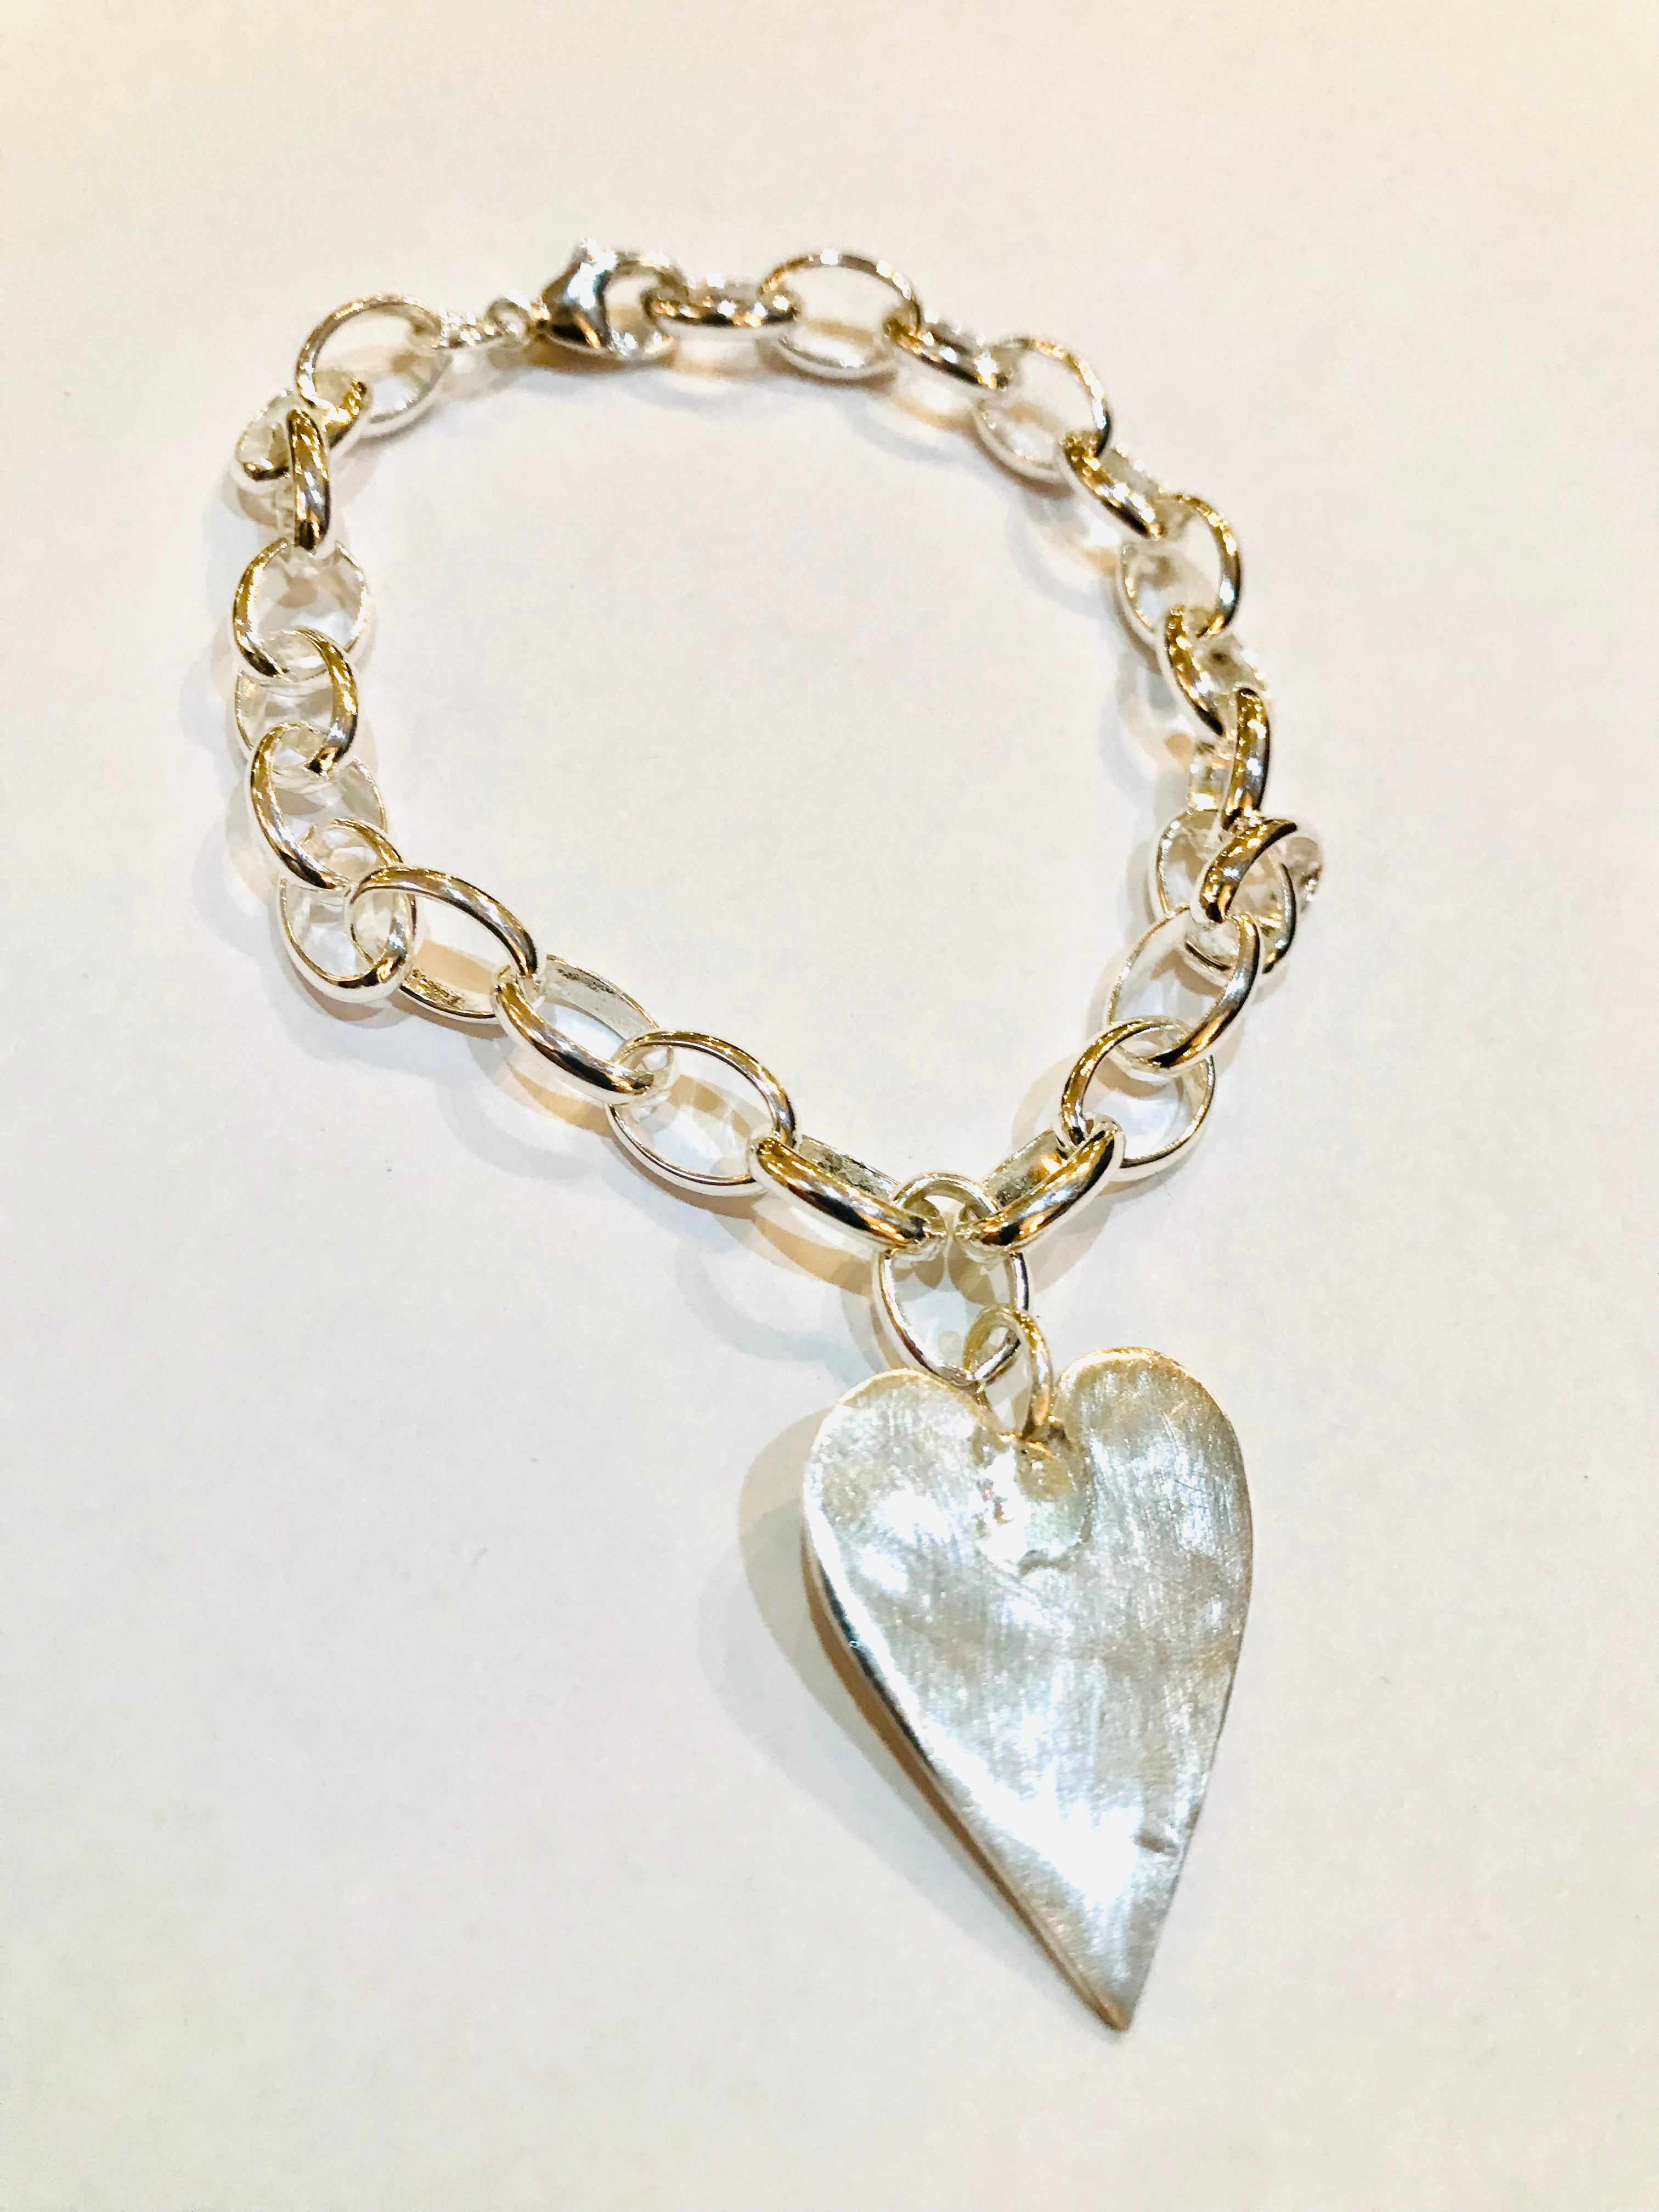 Satin Heart Bracelet - The Nancy Smillie Shop - Art, Jewellery & Designer Gifts Glasgow